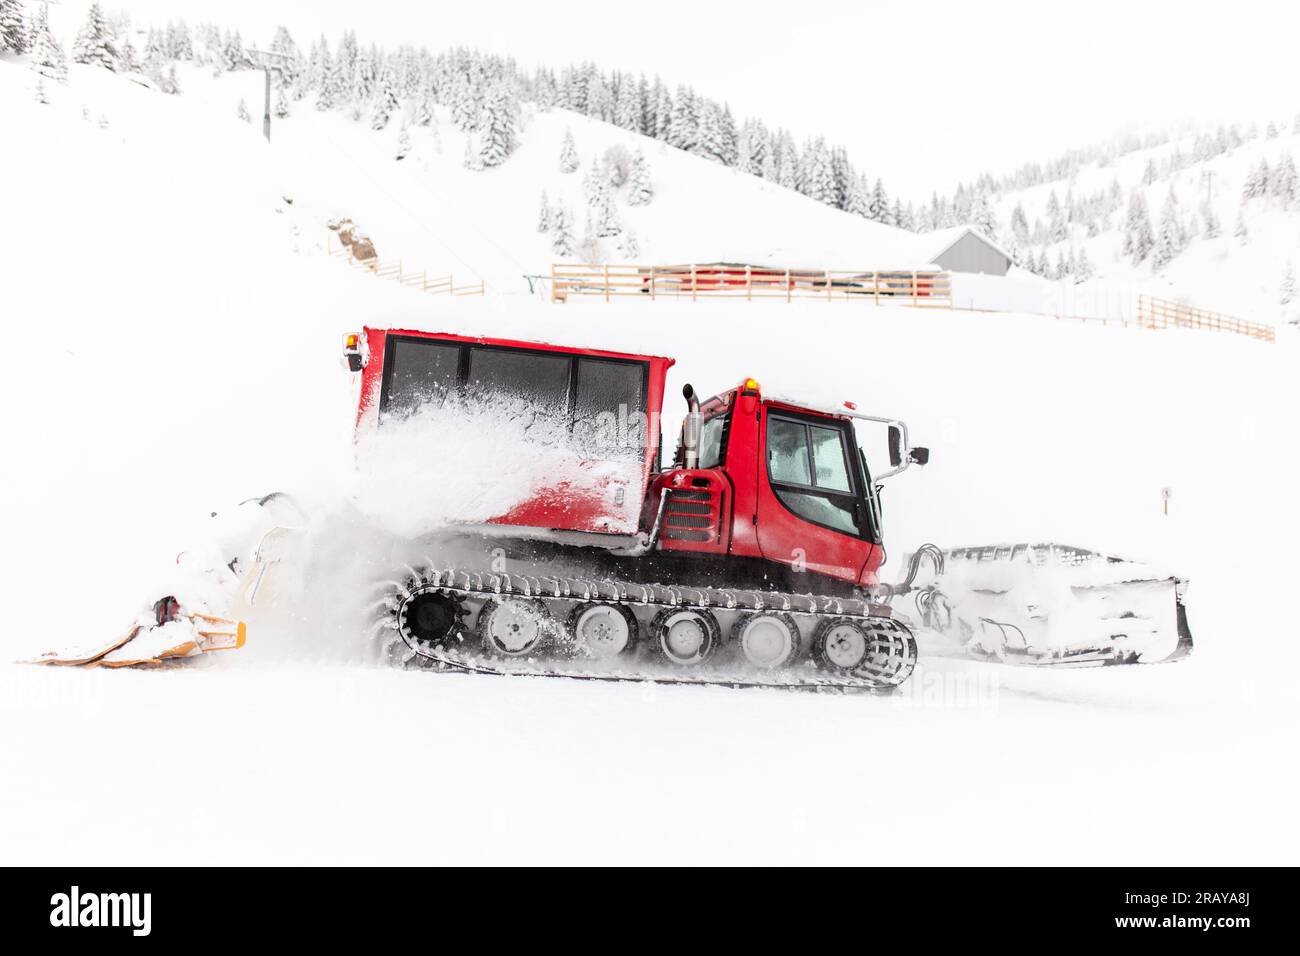 Red snowcat vehicle preparing ski slopes. Stock Photo